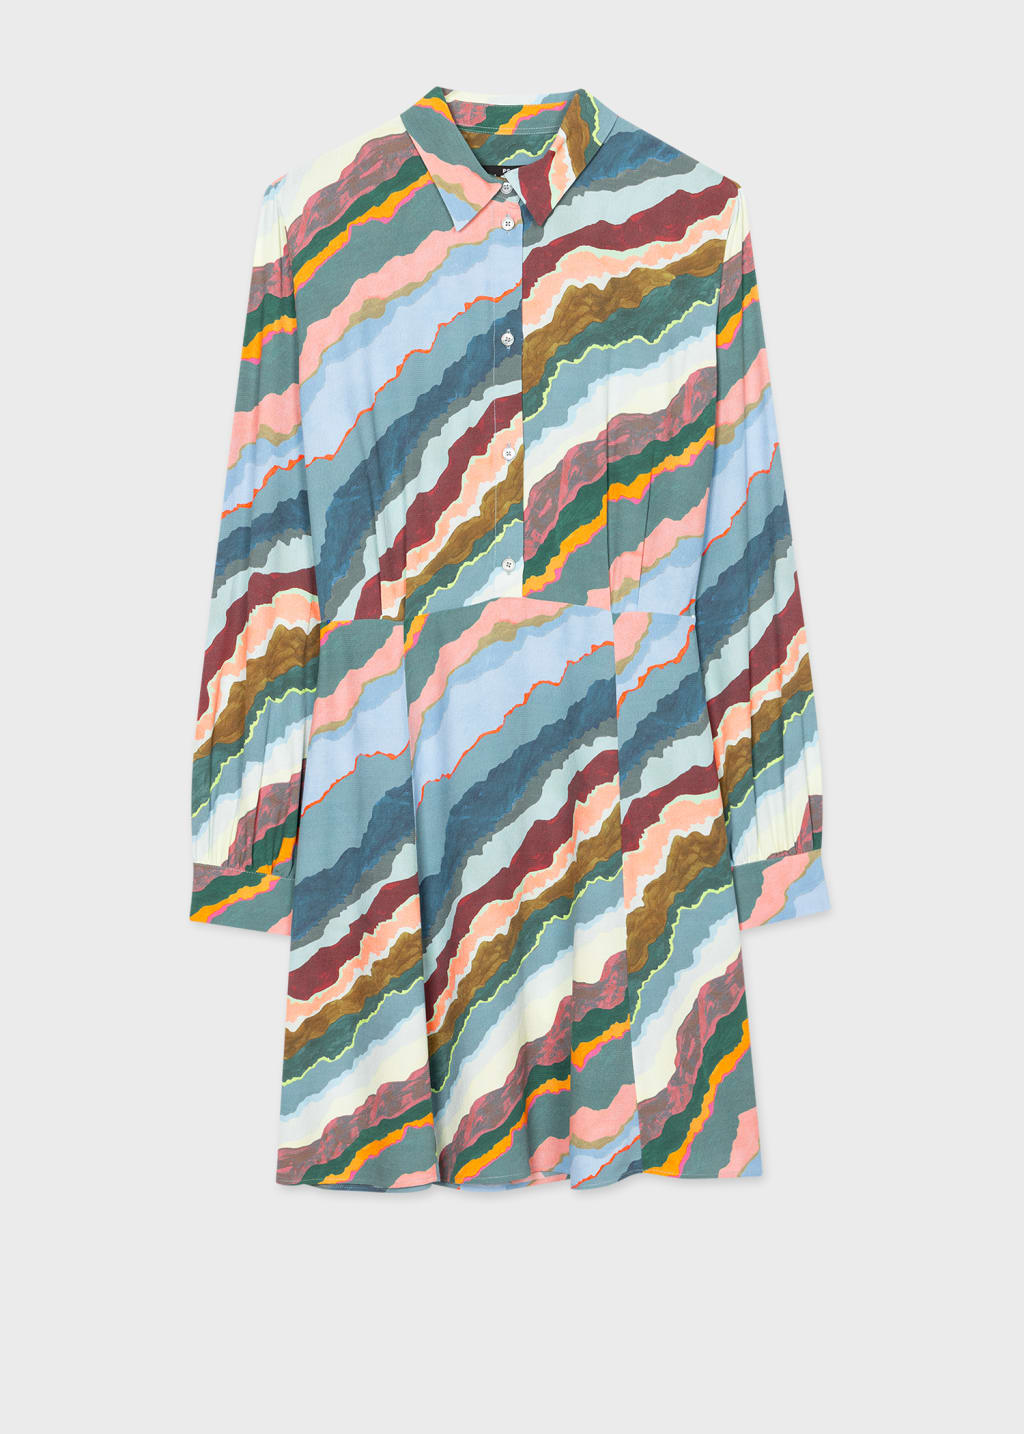 Product View - Women's 'Torn Stripe' Shirt Dress by Paul Smith